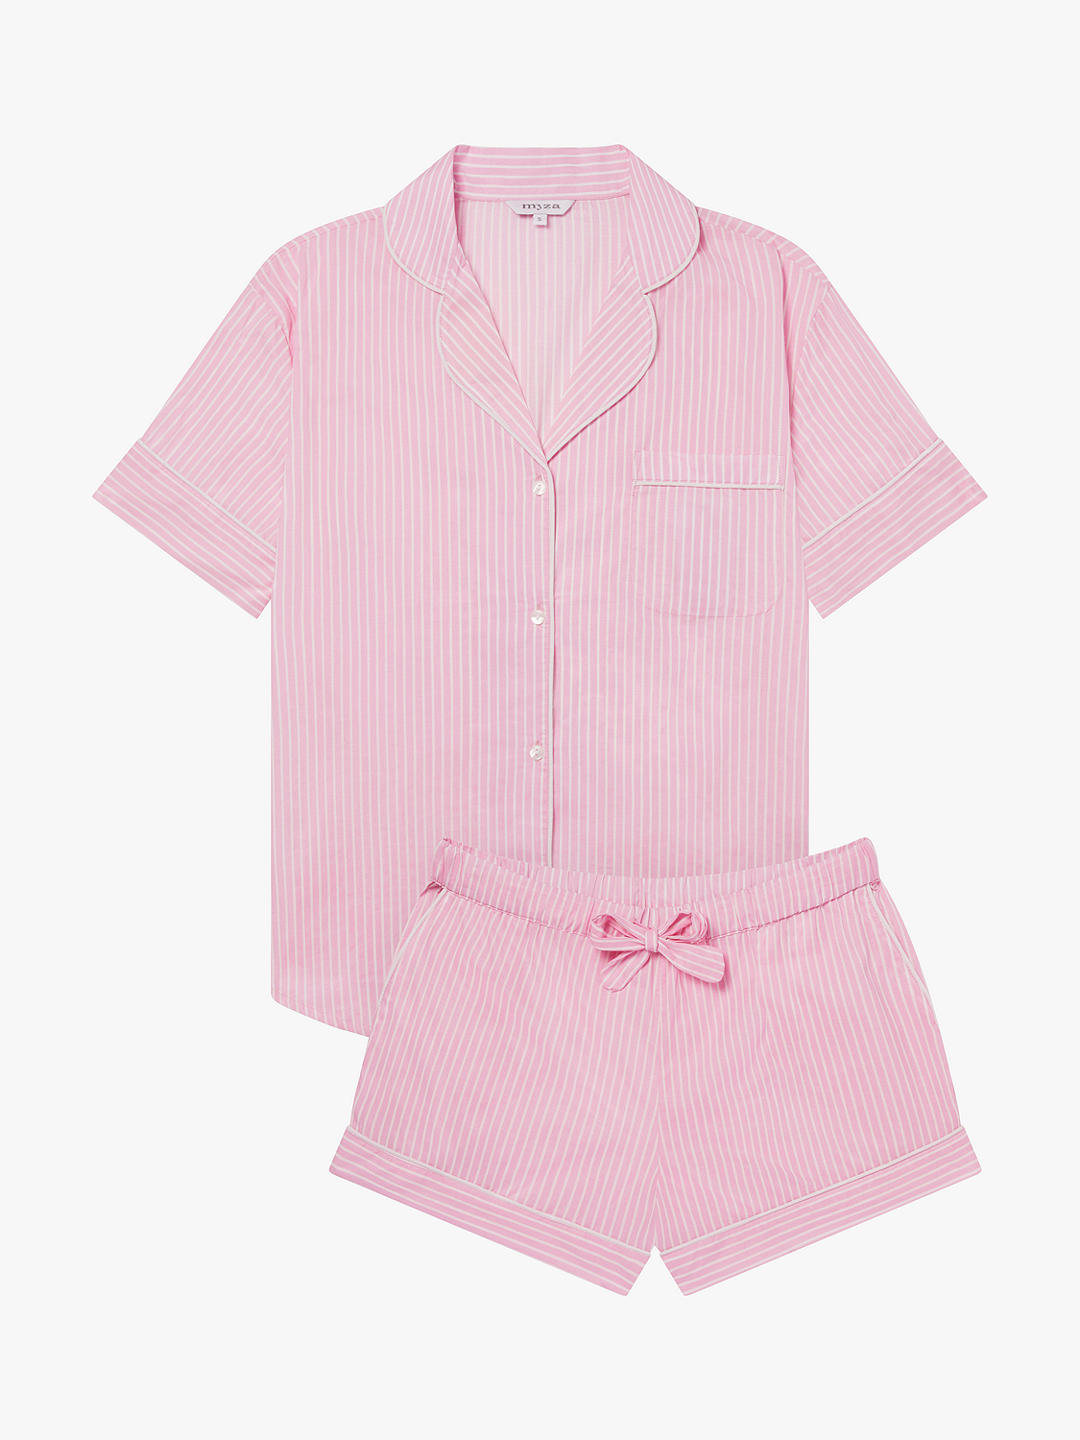 myza Organic Cotton Striped Short Sleeve Pyjama Set, Pink/White